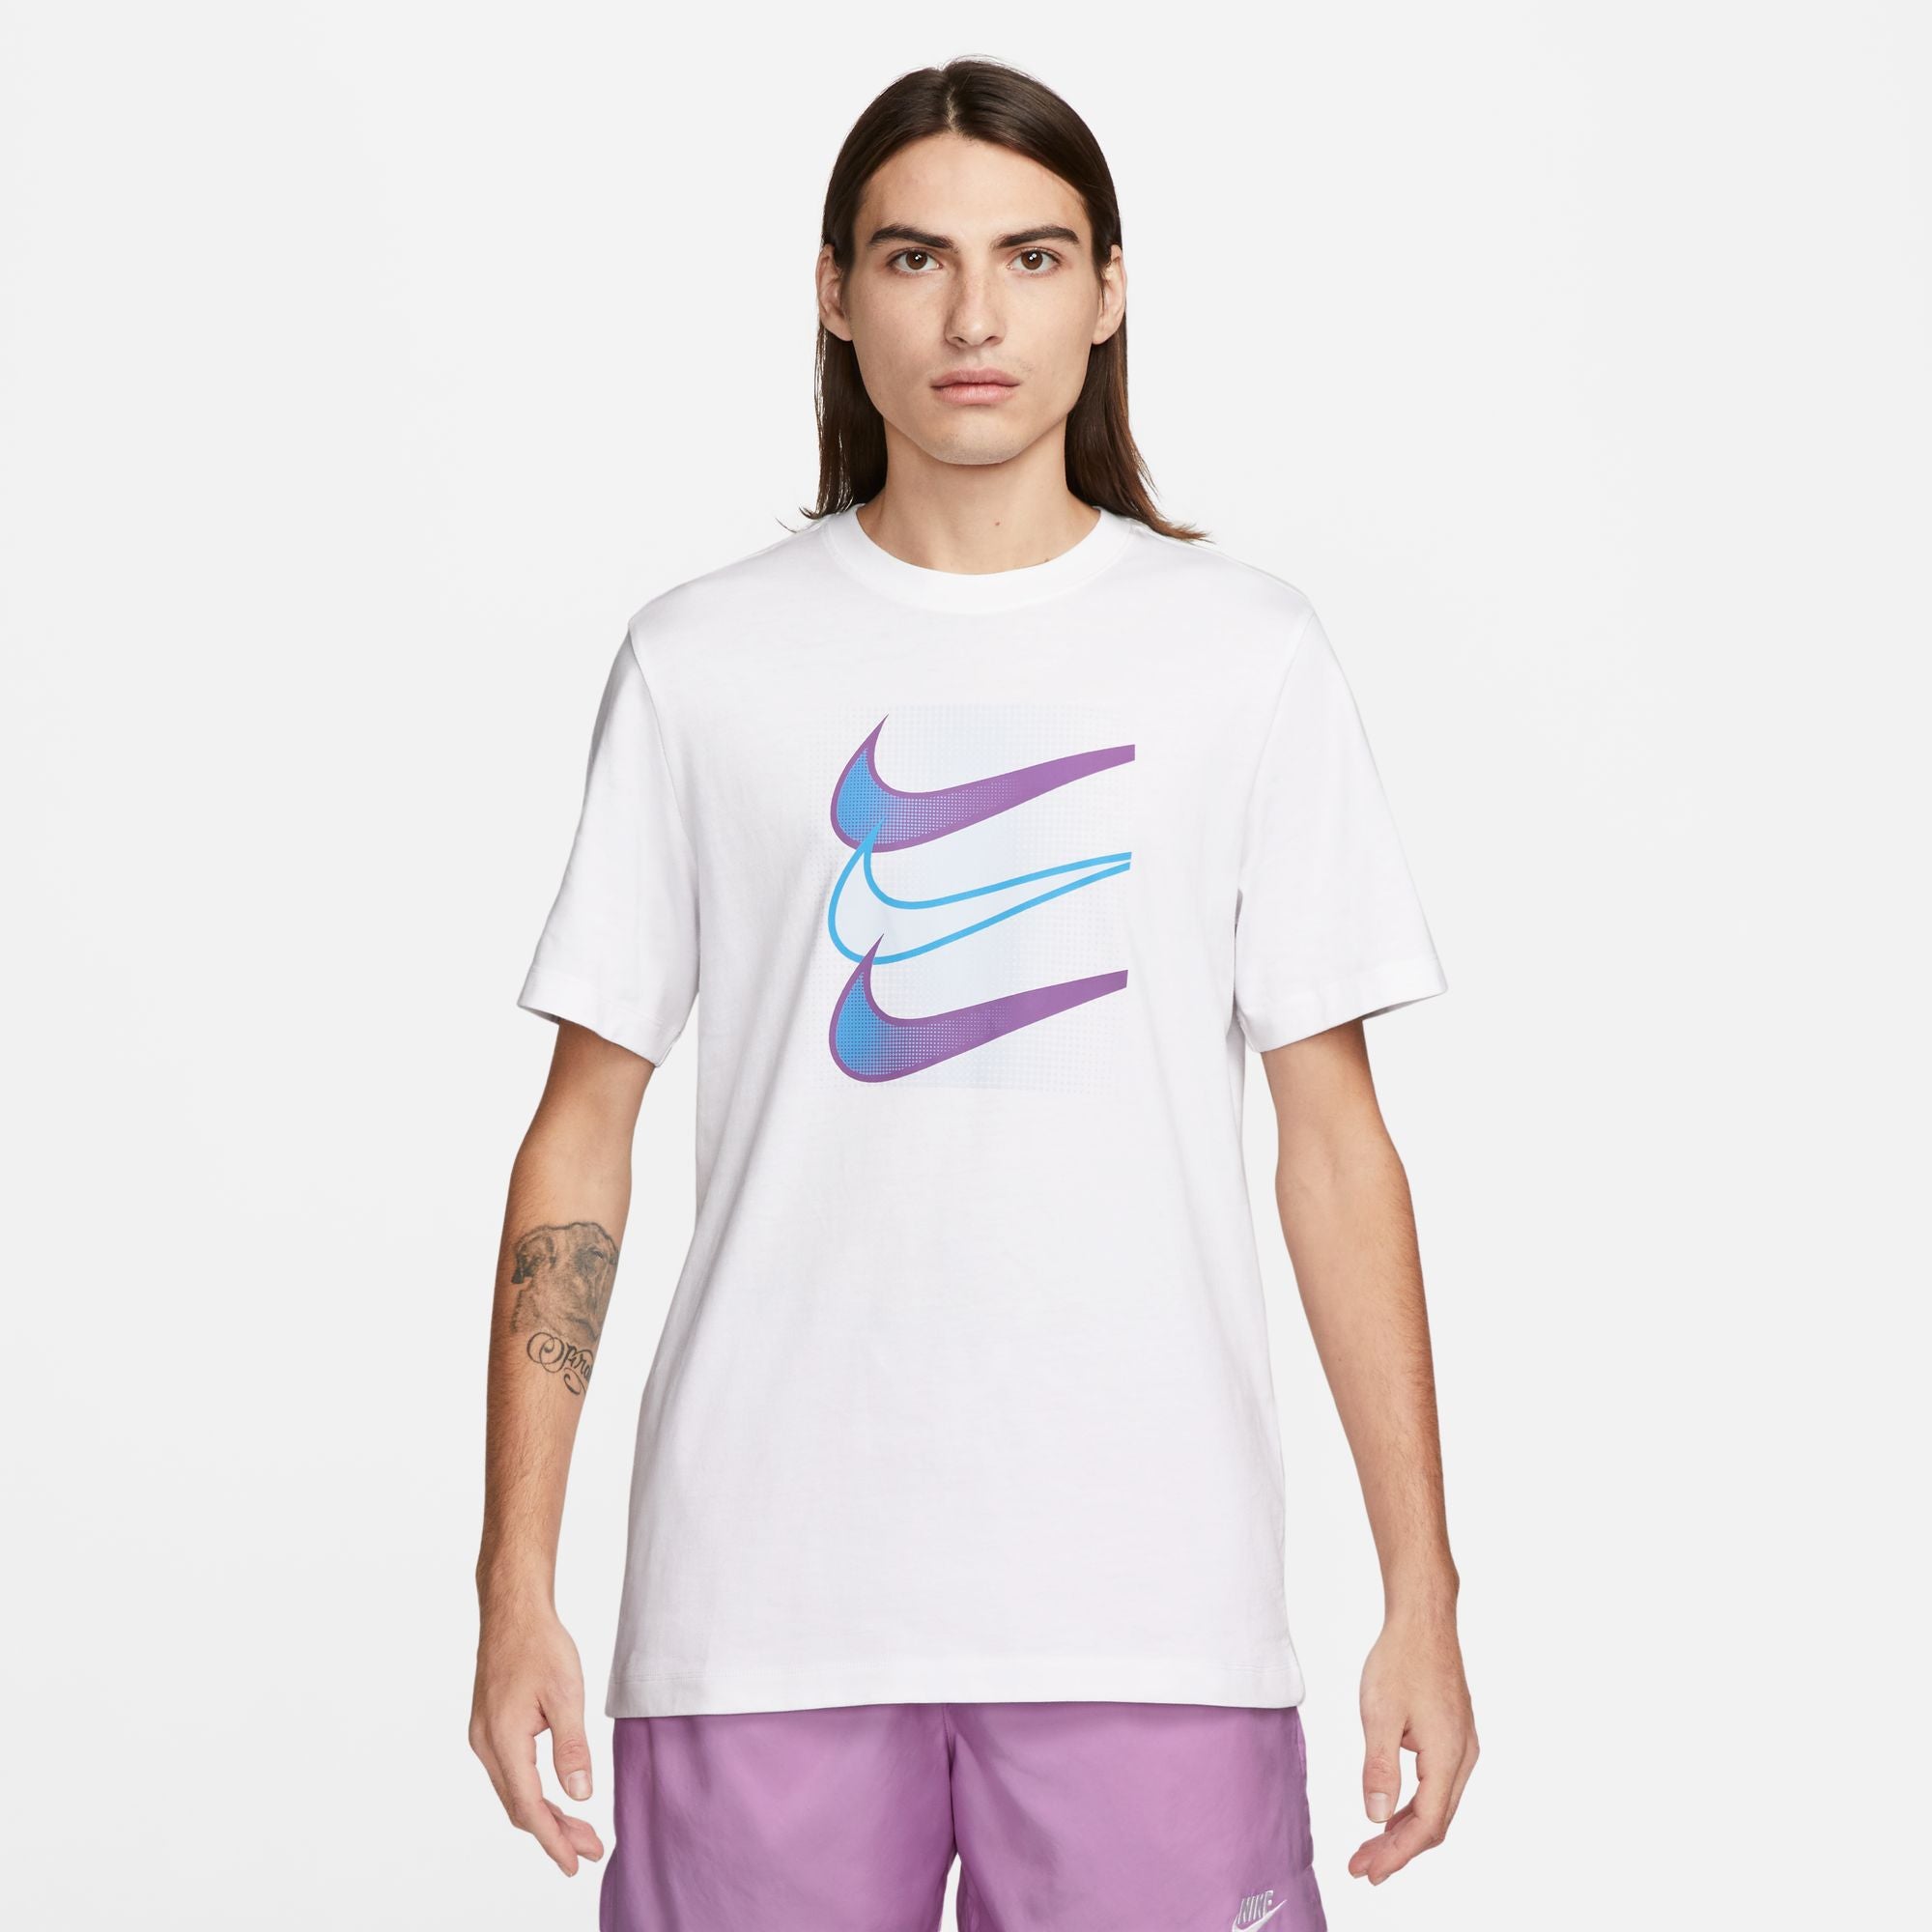 T-Shirt Nike Sportswear - Weiß/Blau/Rose